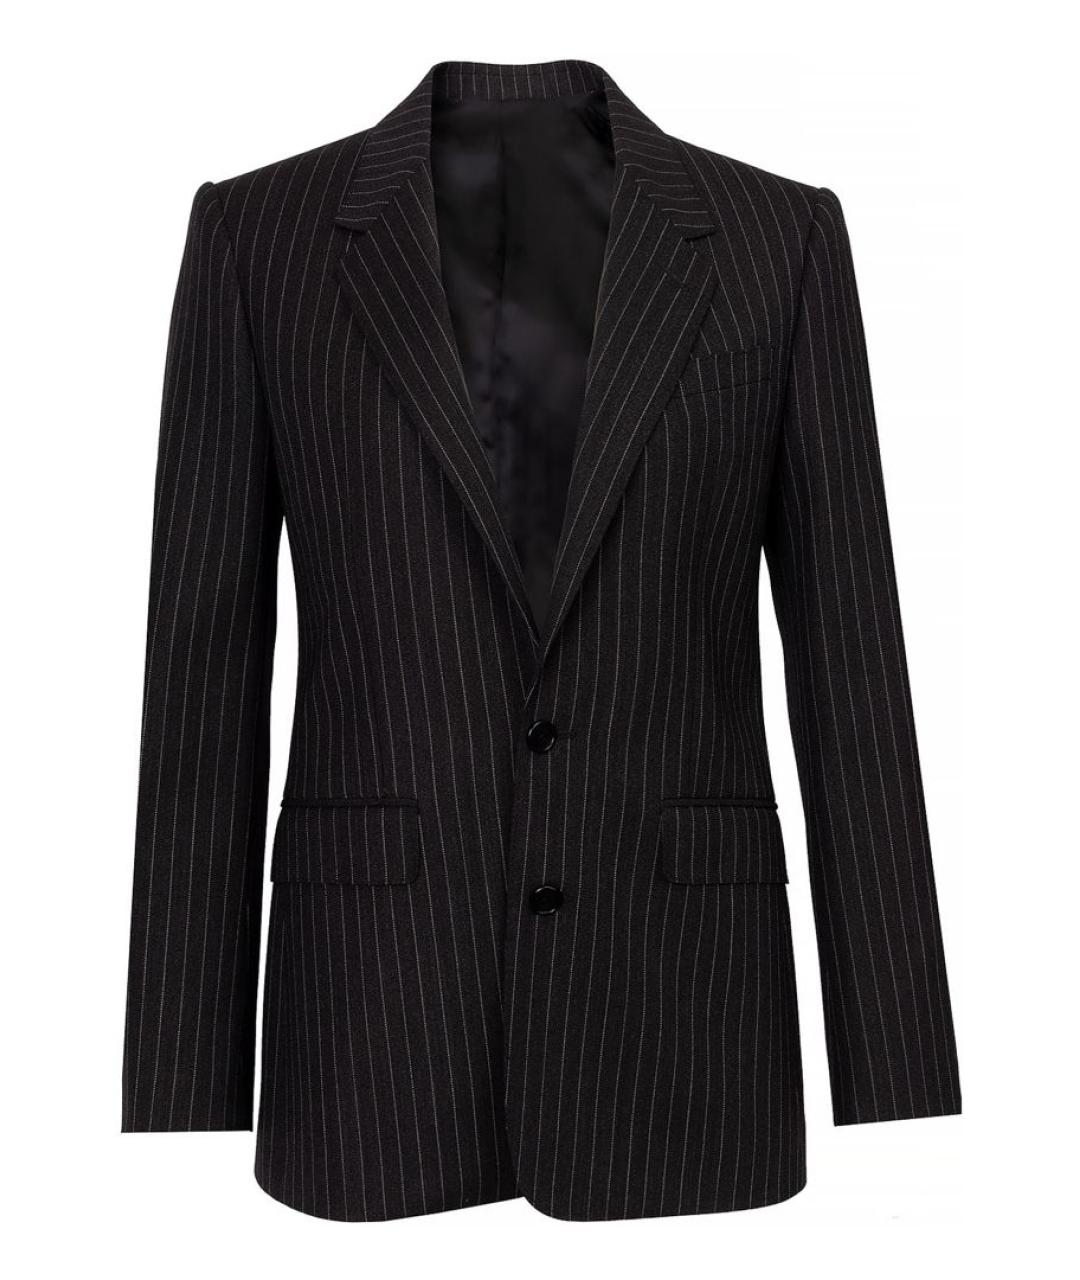 CELINE PRE-OWNED Серый шерстяной жакет/пиджак, фото 1